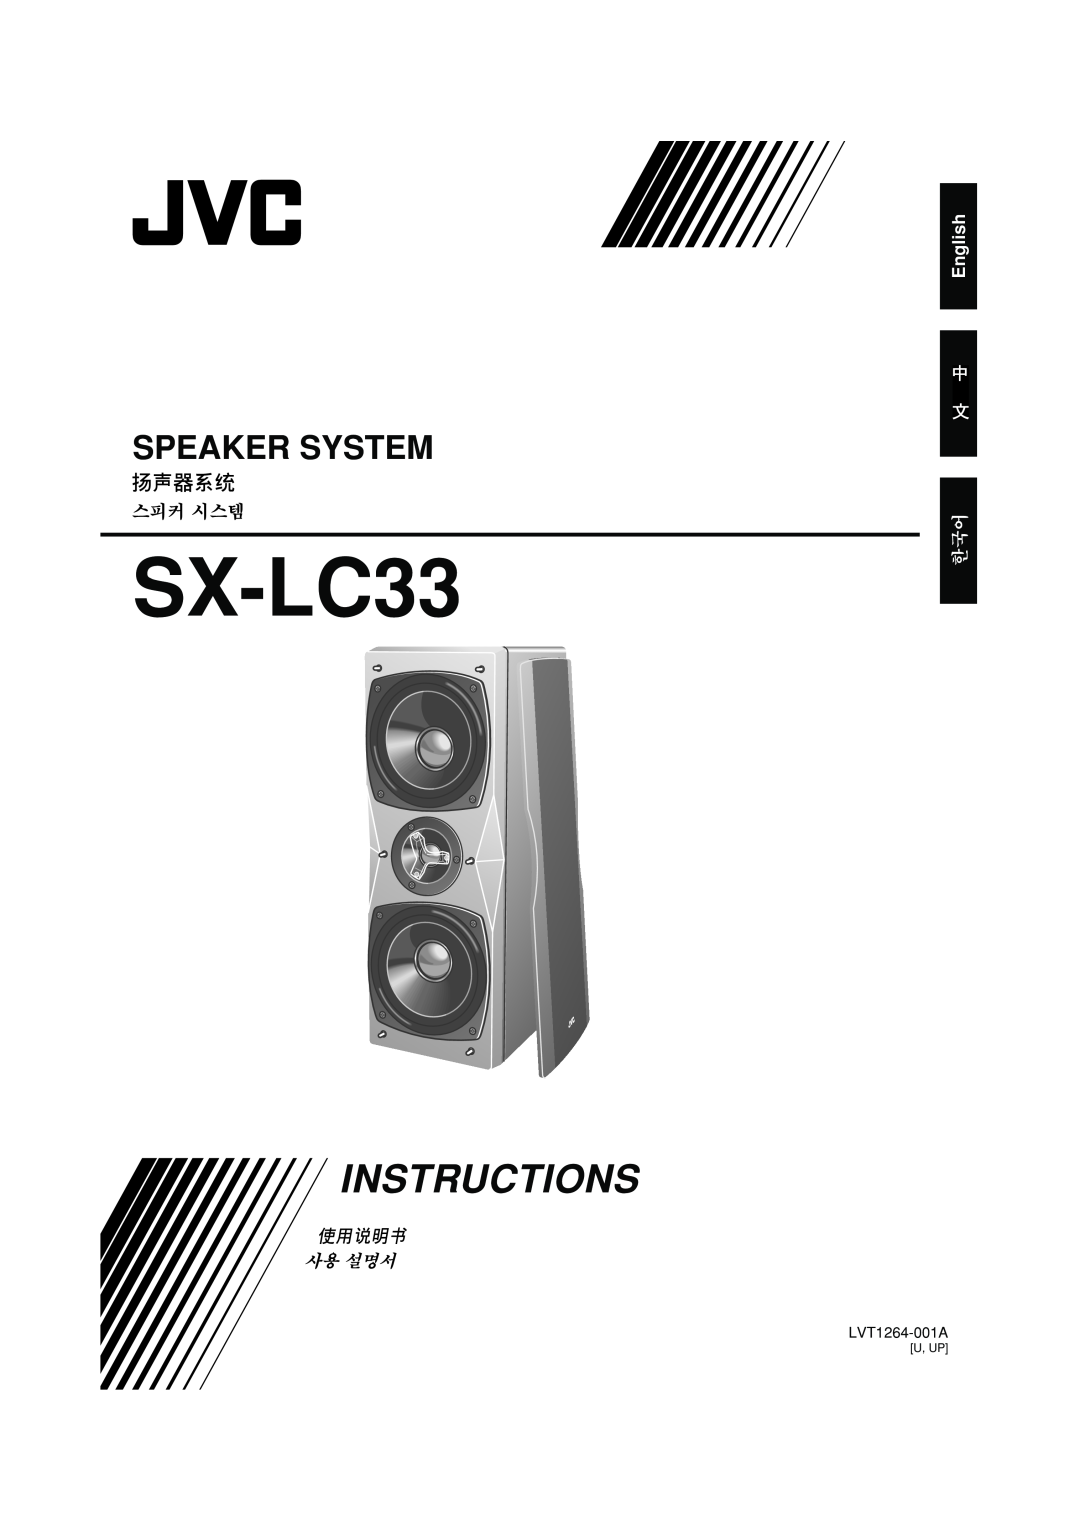 JVC SX-LC33 manual English, LVT1264-001A, Instructions, Speaker System 